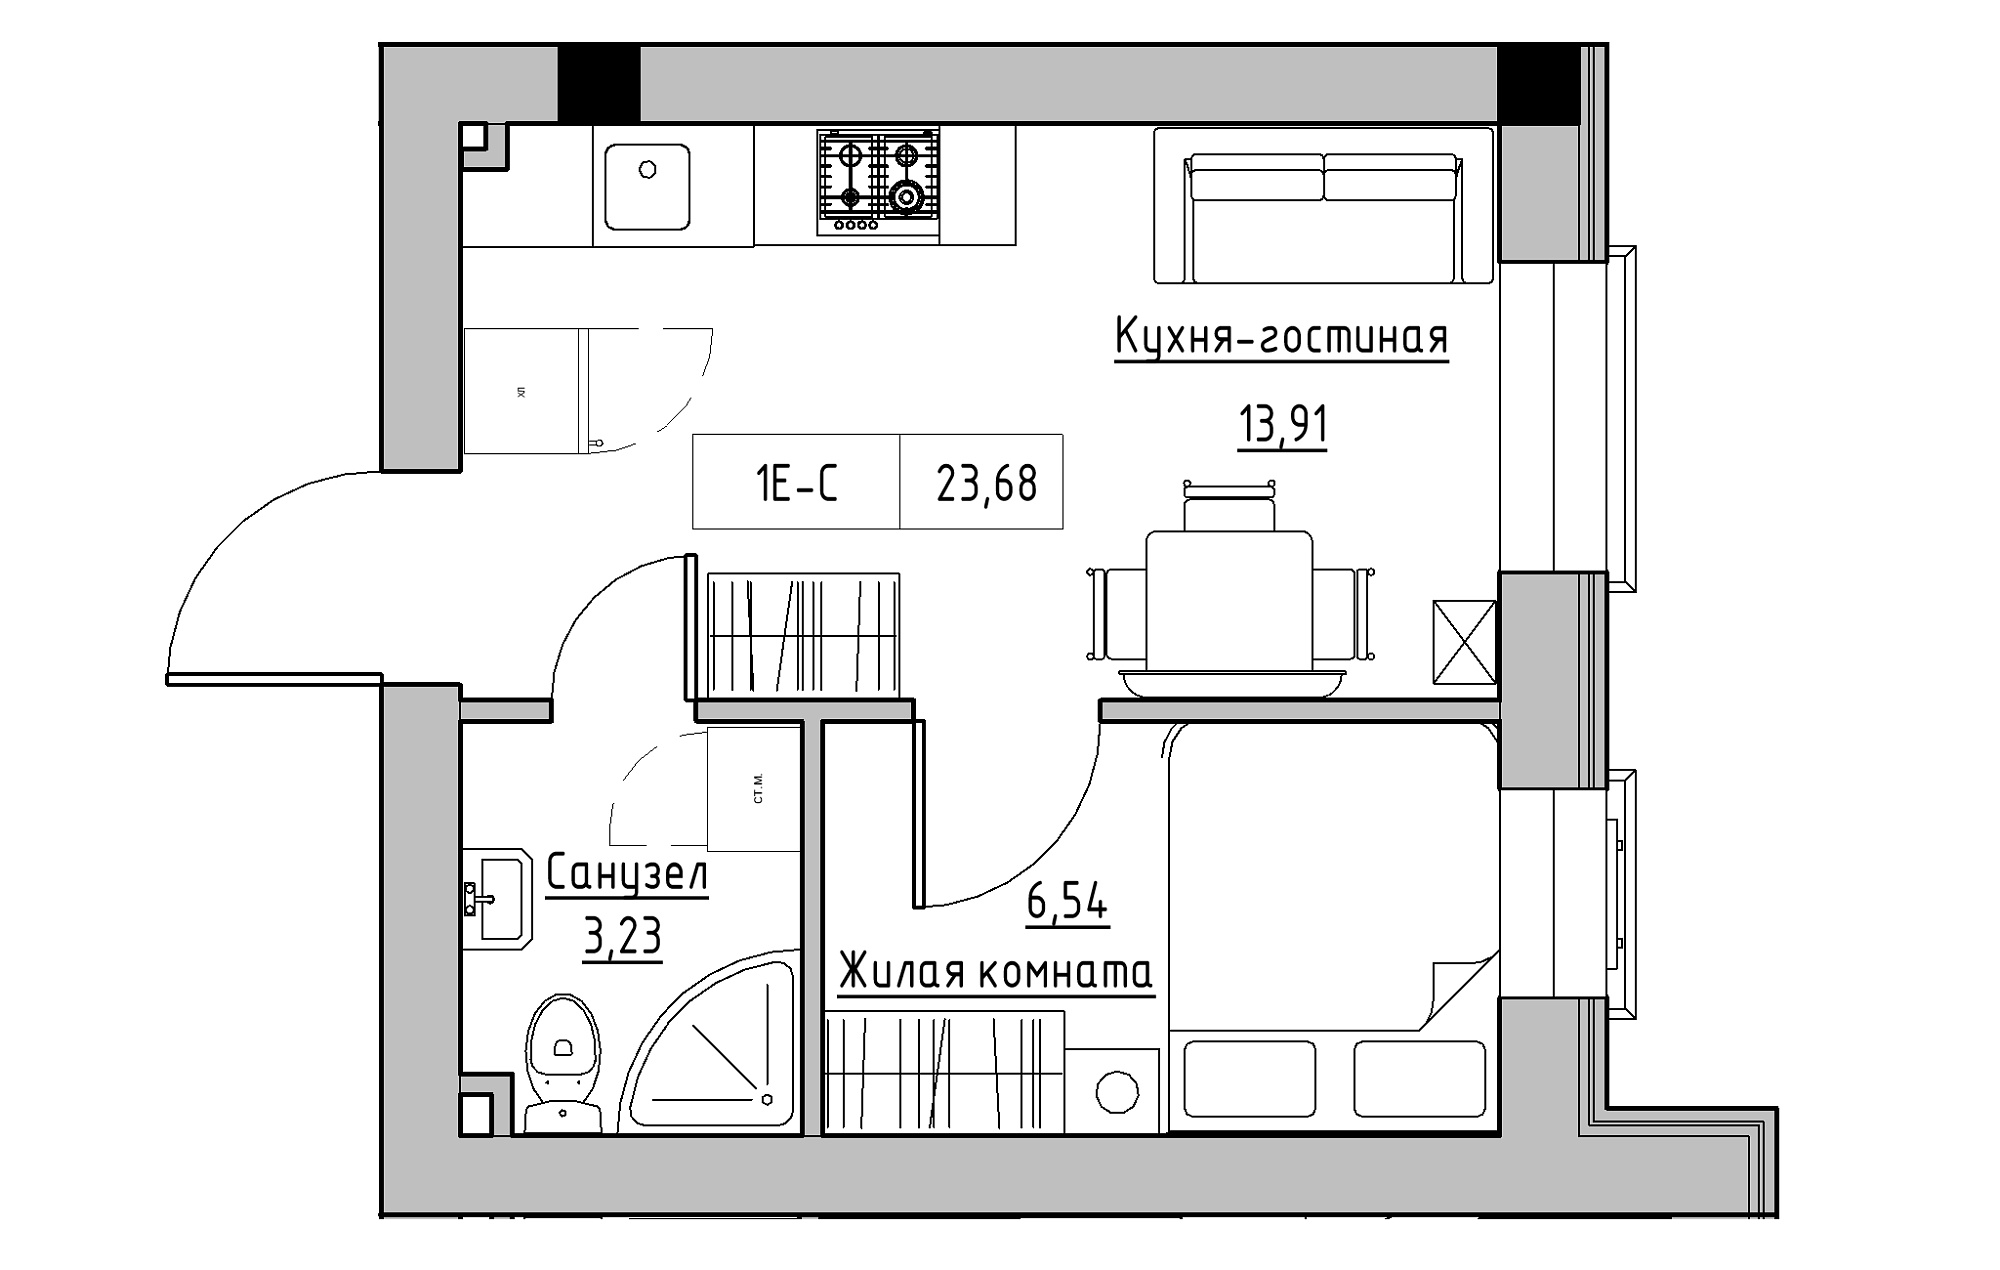 Planning 1-rm flats area 23.68m2, KS-018-01/0009.